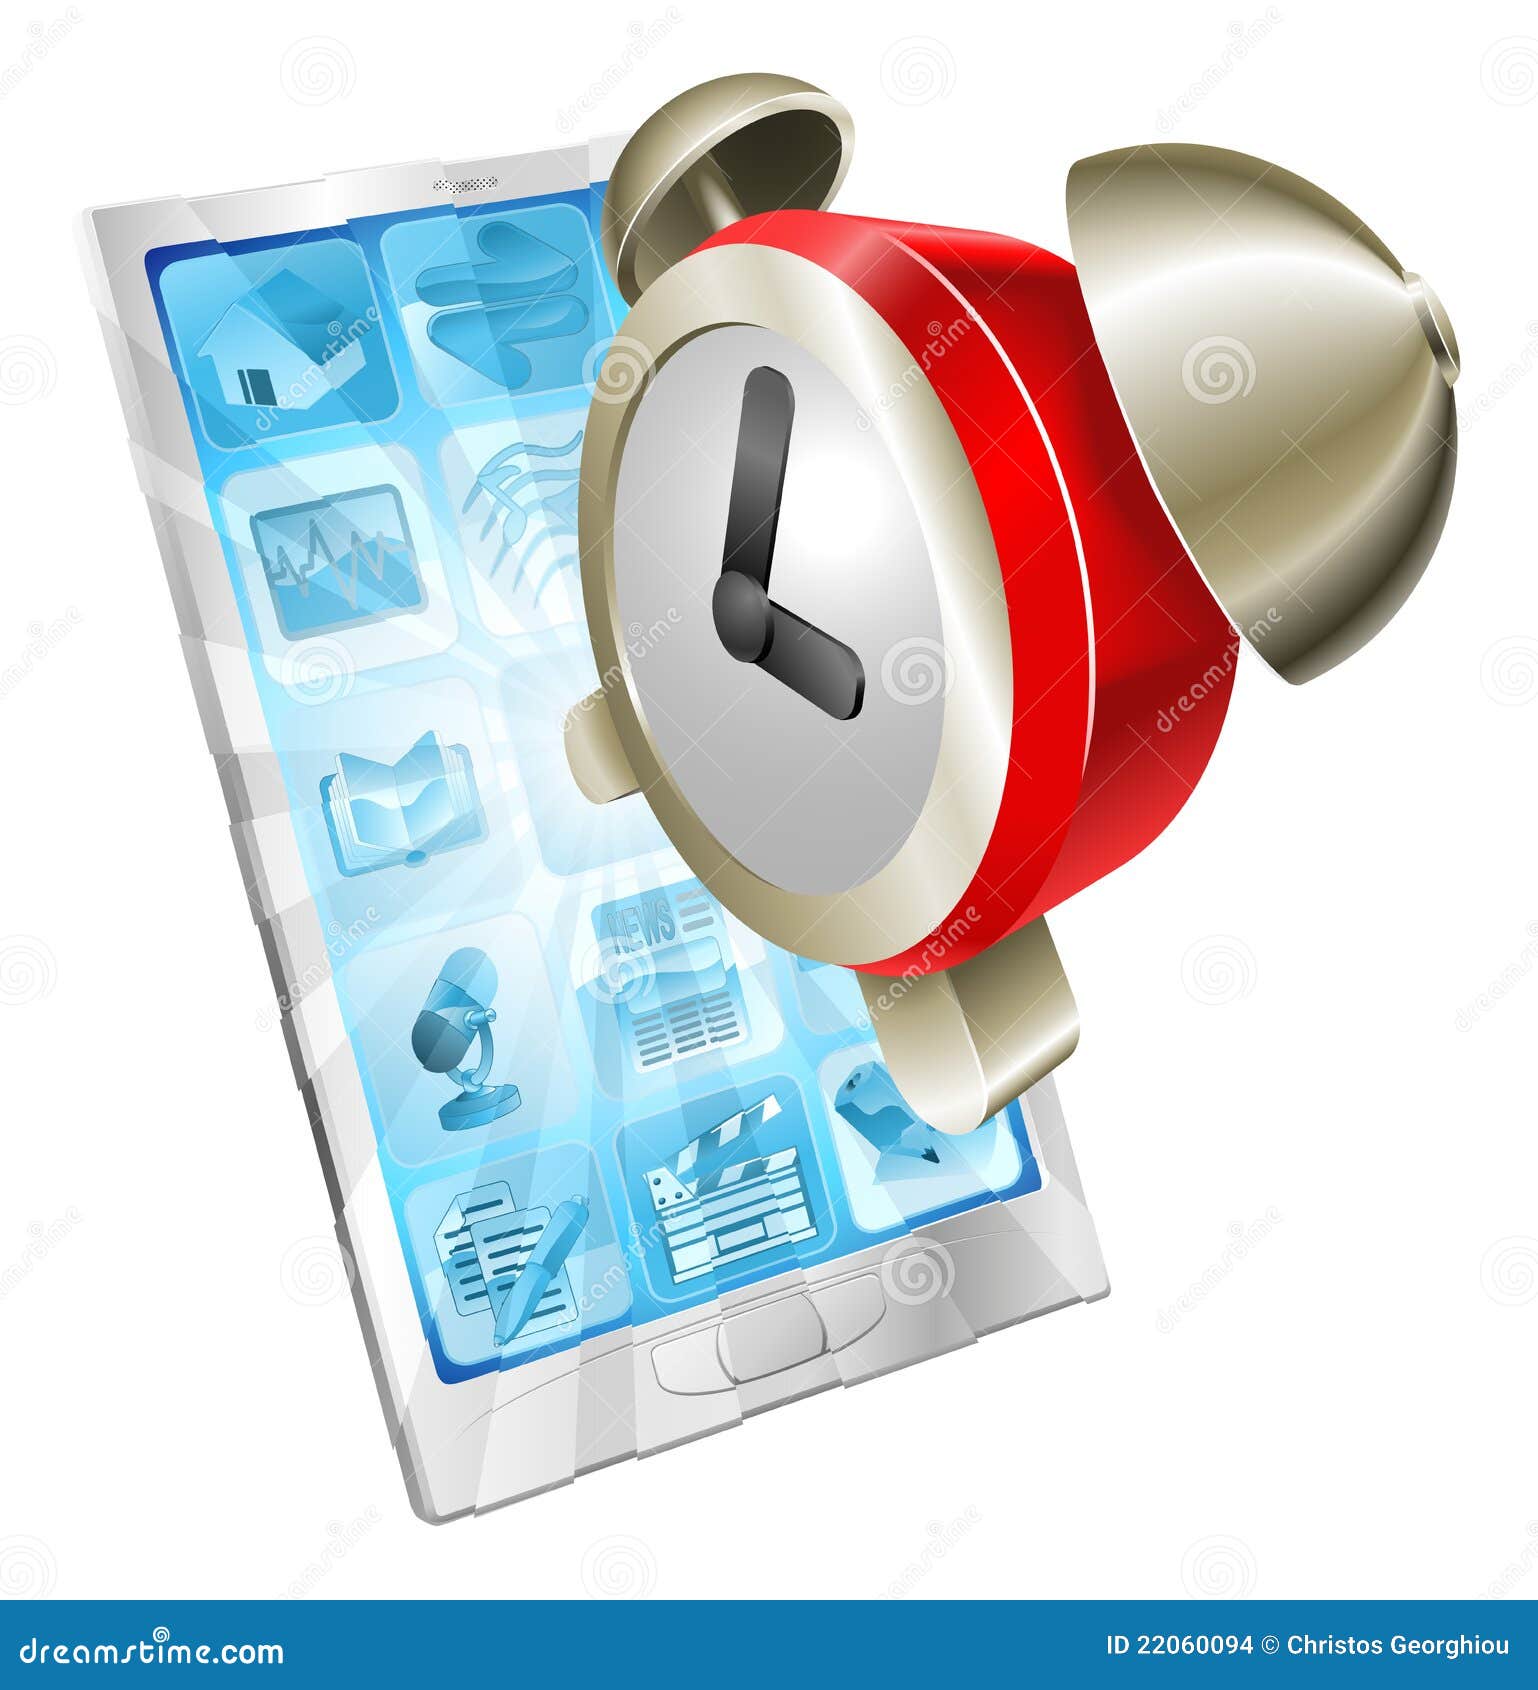 phone clock alarm icon concept